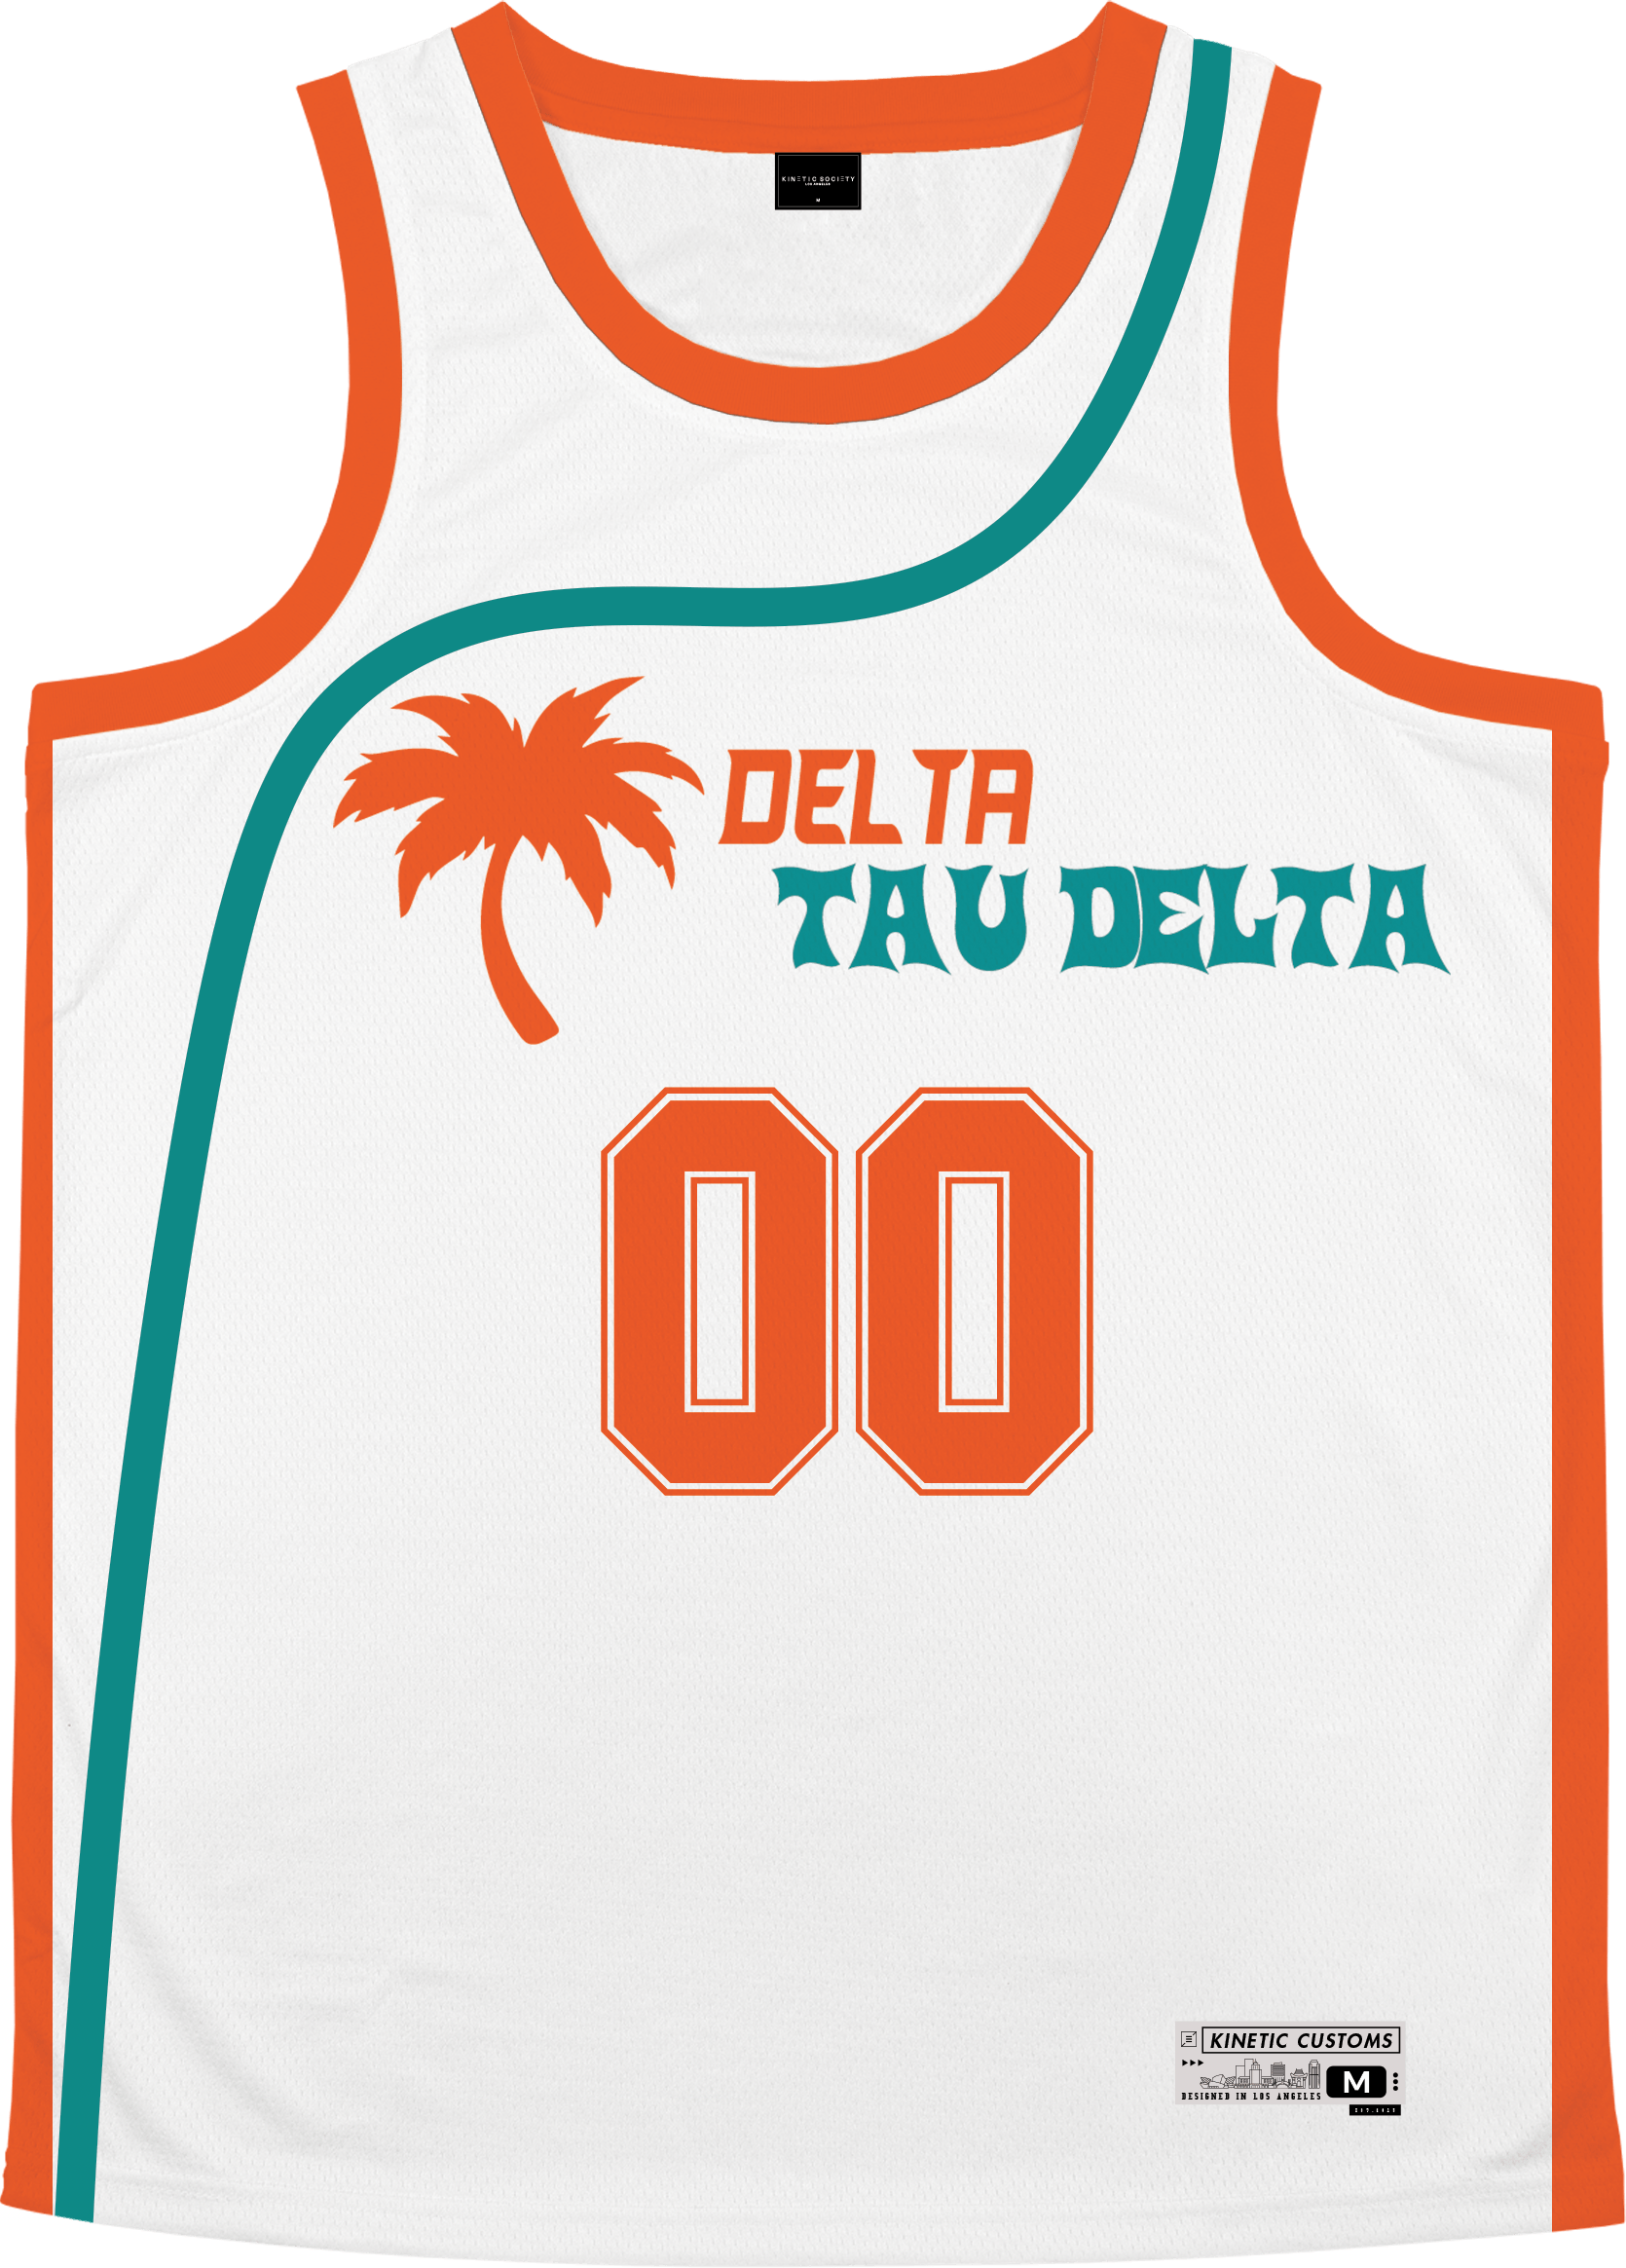 Delta Tau Delta Custom Basketball Jersey | Style 39 Medium